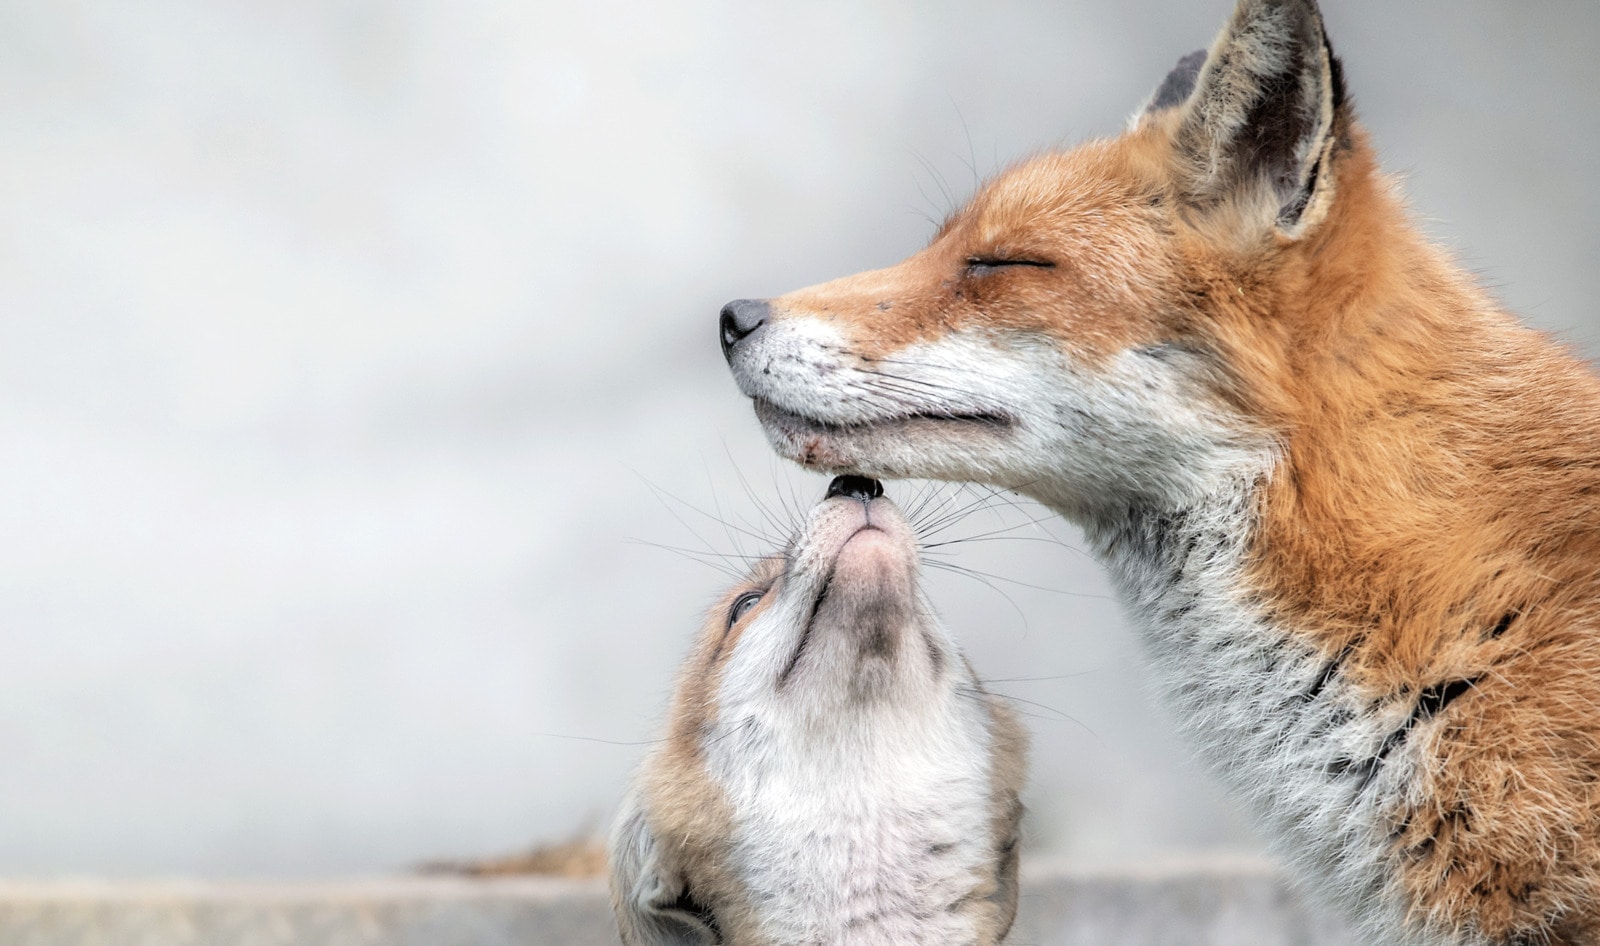 Hungary Bans Mink, Fox, and Ferret Fur Farming